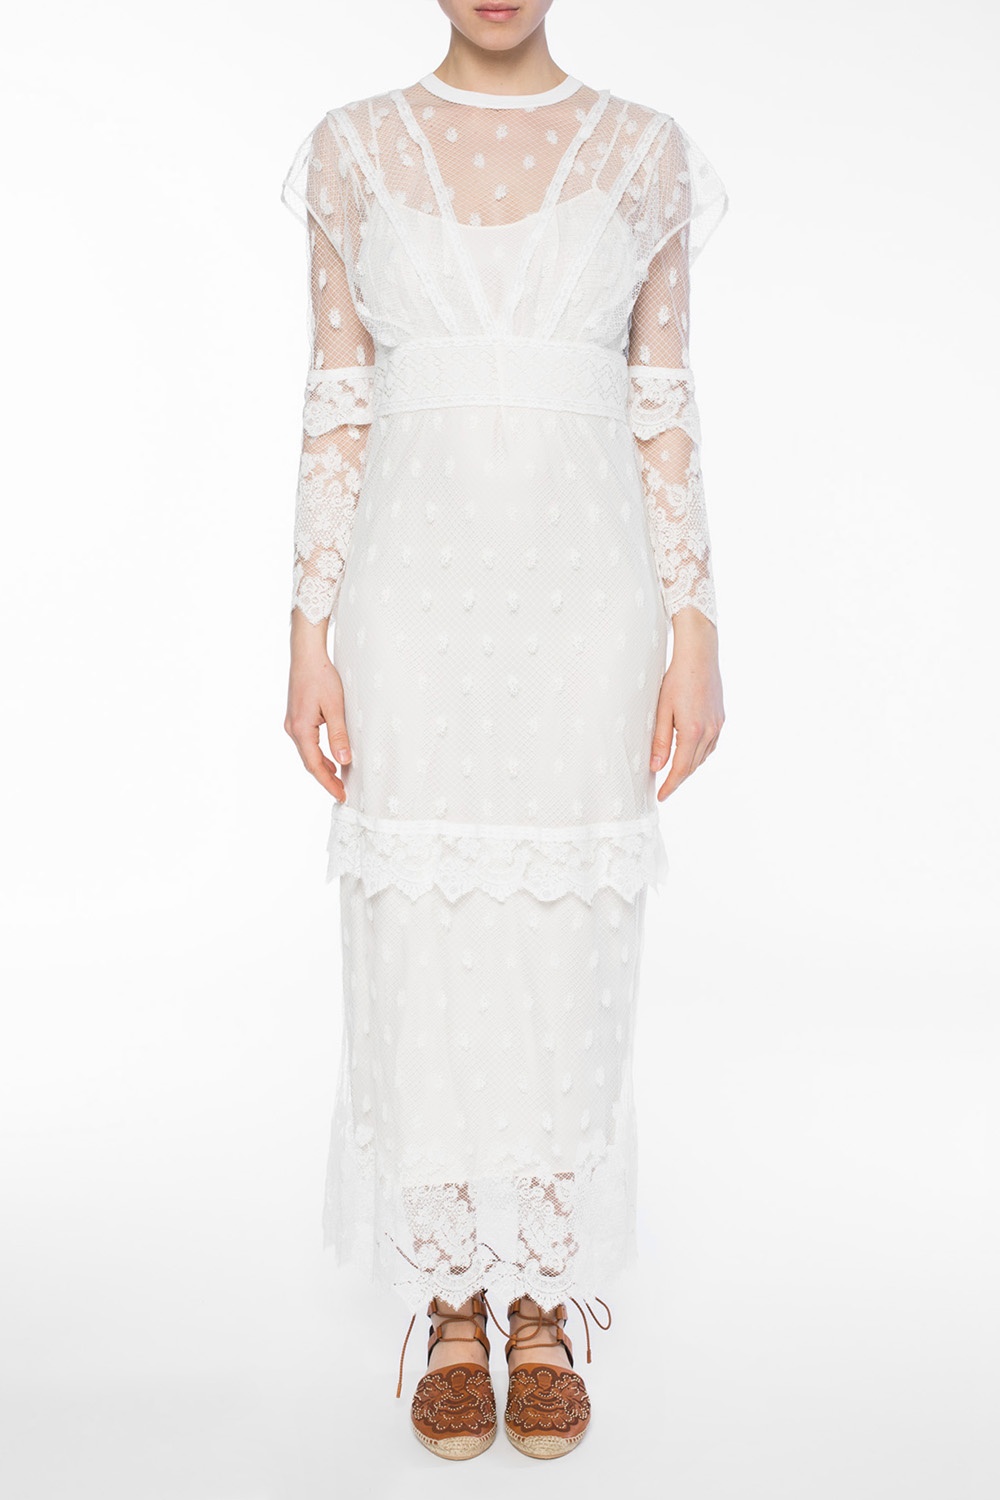 Arriba 59+ imagen burberry white lace dress